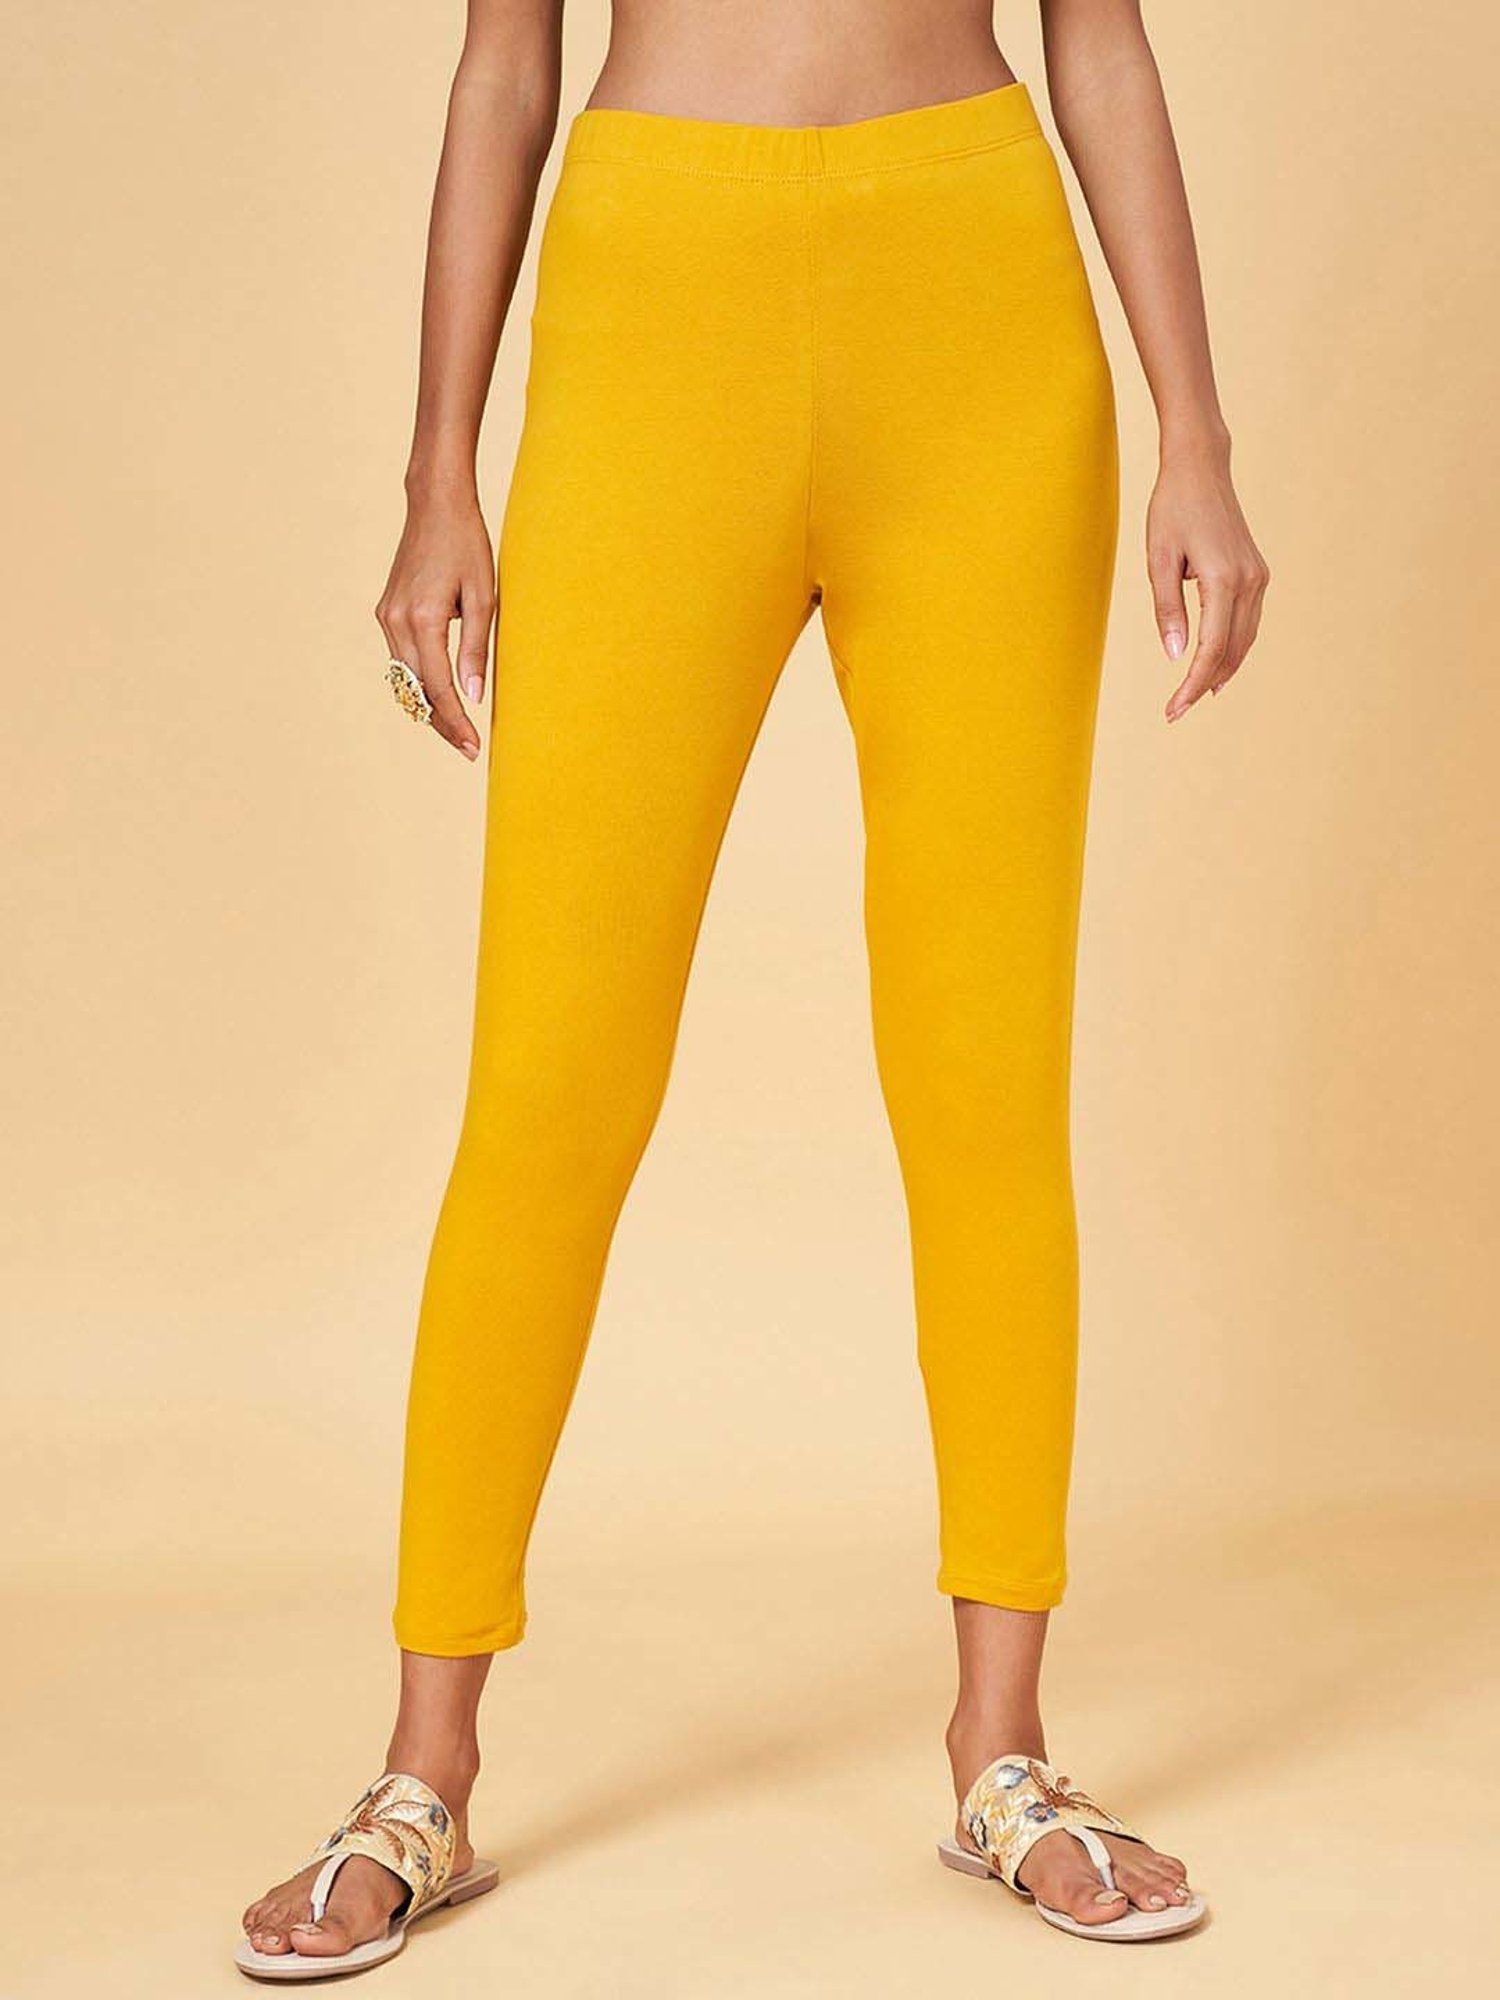 Buy Women's Cotton Ankle Length Legging -Size 28 Yellow & Dark Orange (Pack  of 2) at Amazon.in